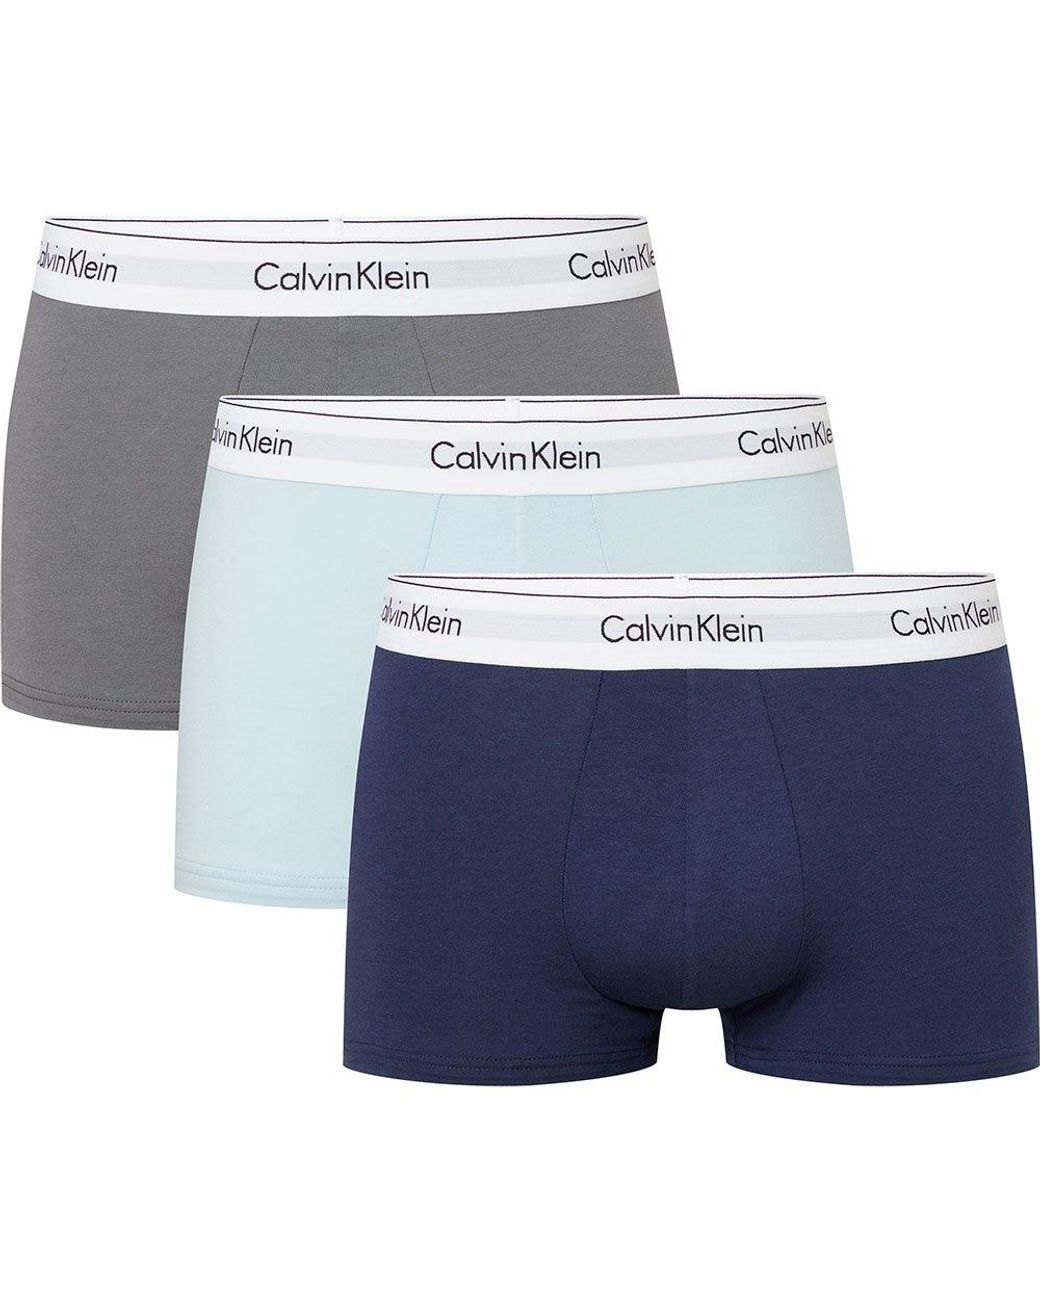 Calvin Klein 3 Pack Modern Cotton Stretch Trunks in Blue for Men - Save 30%  | Lyst